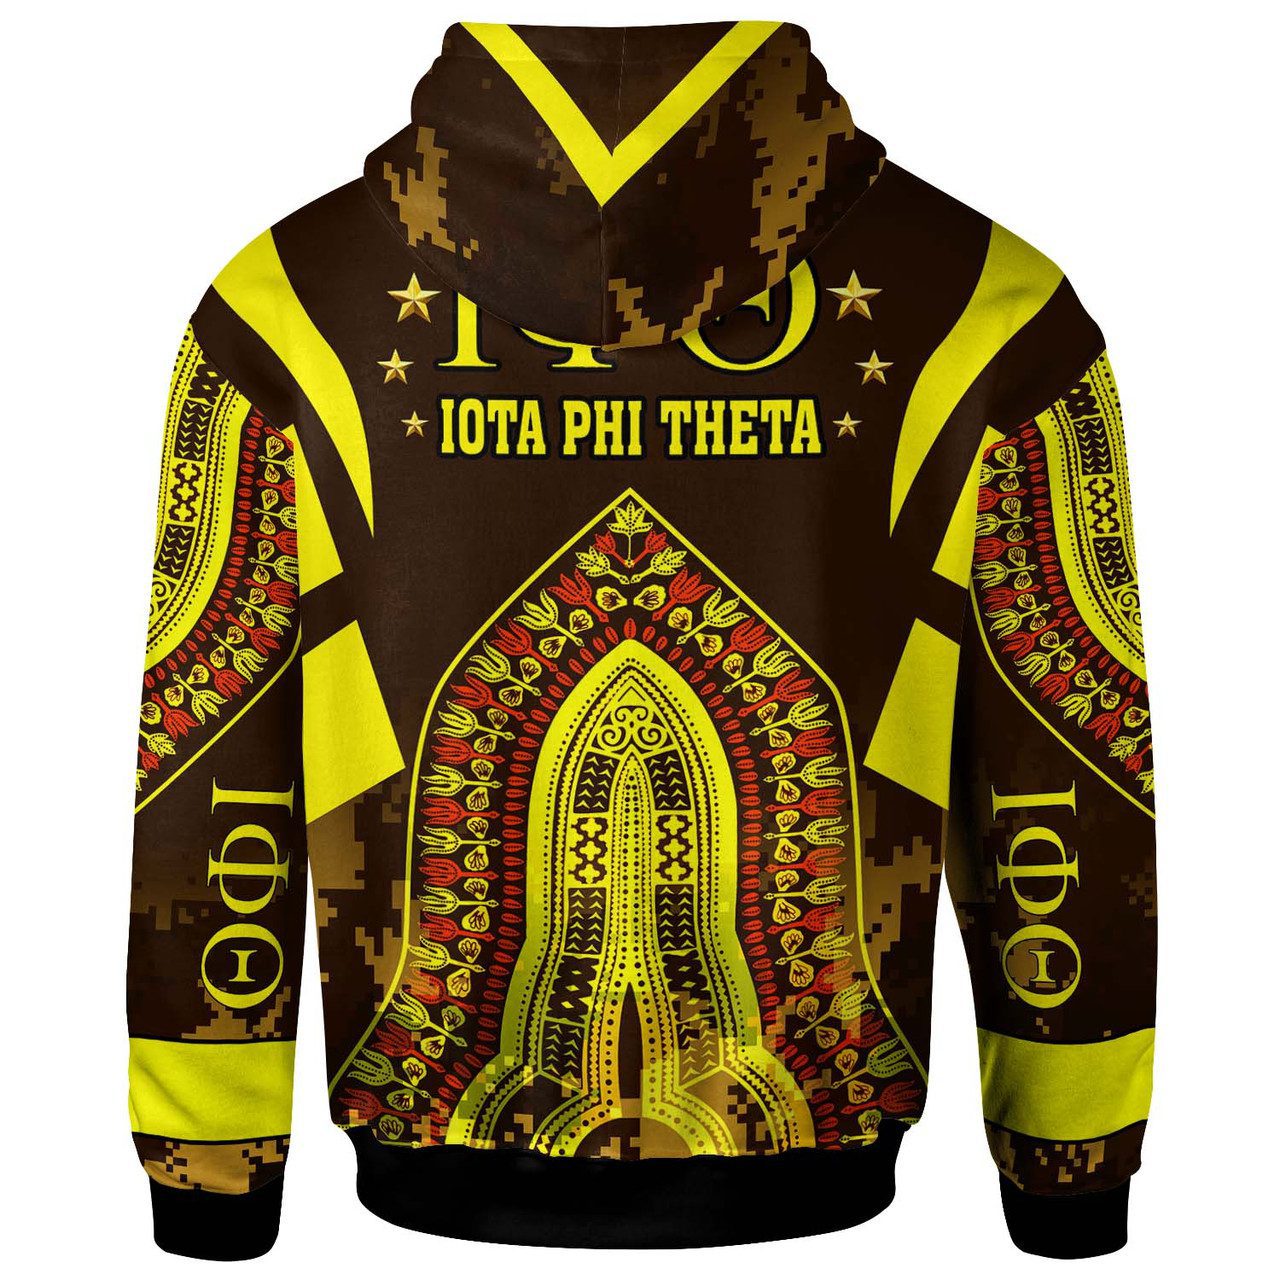 Iota Phi Theta Hoodie – Custom Iota Phi Theta Fraternity Dashiki Culture Camouflage Patterns Hoodie